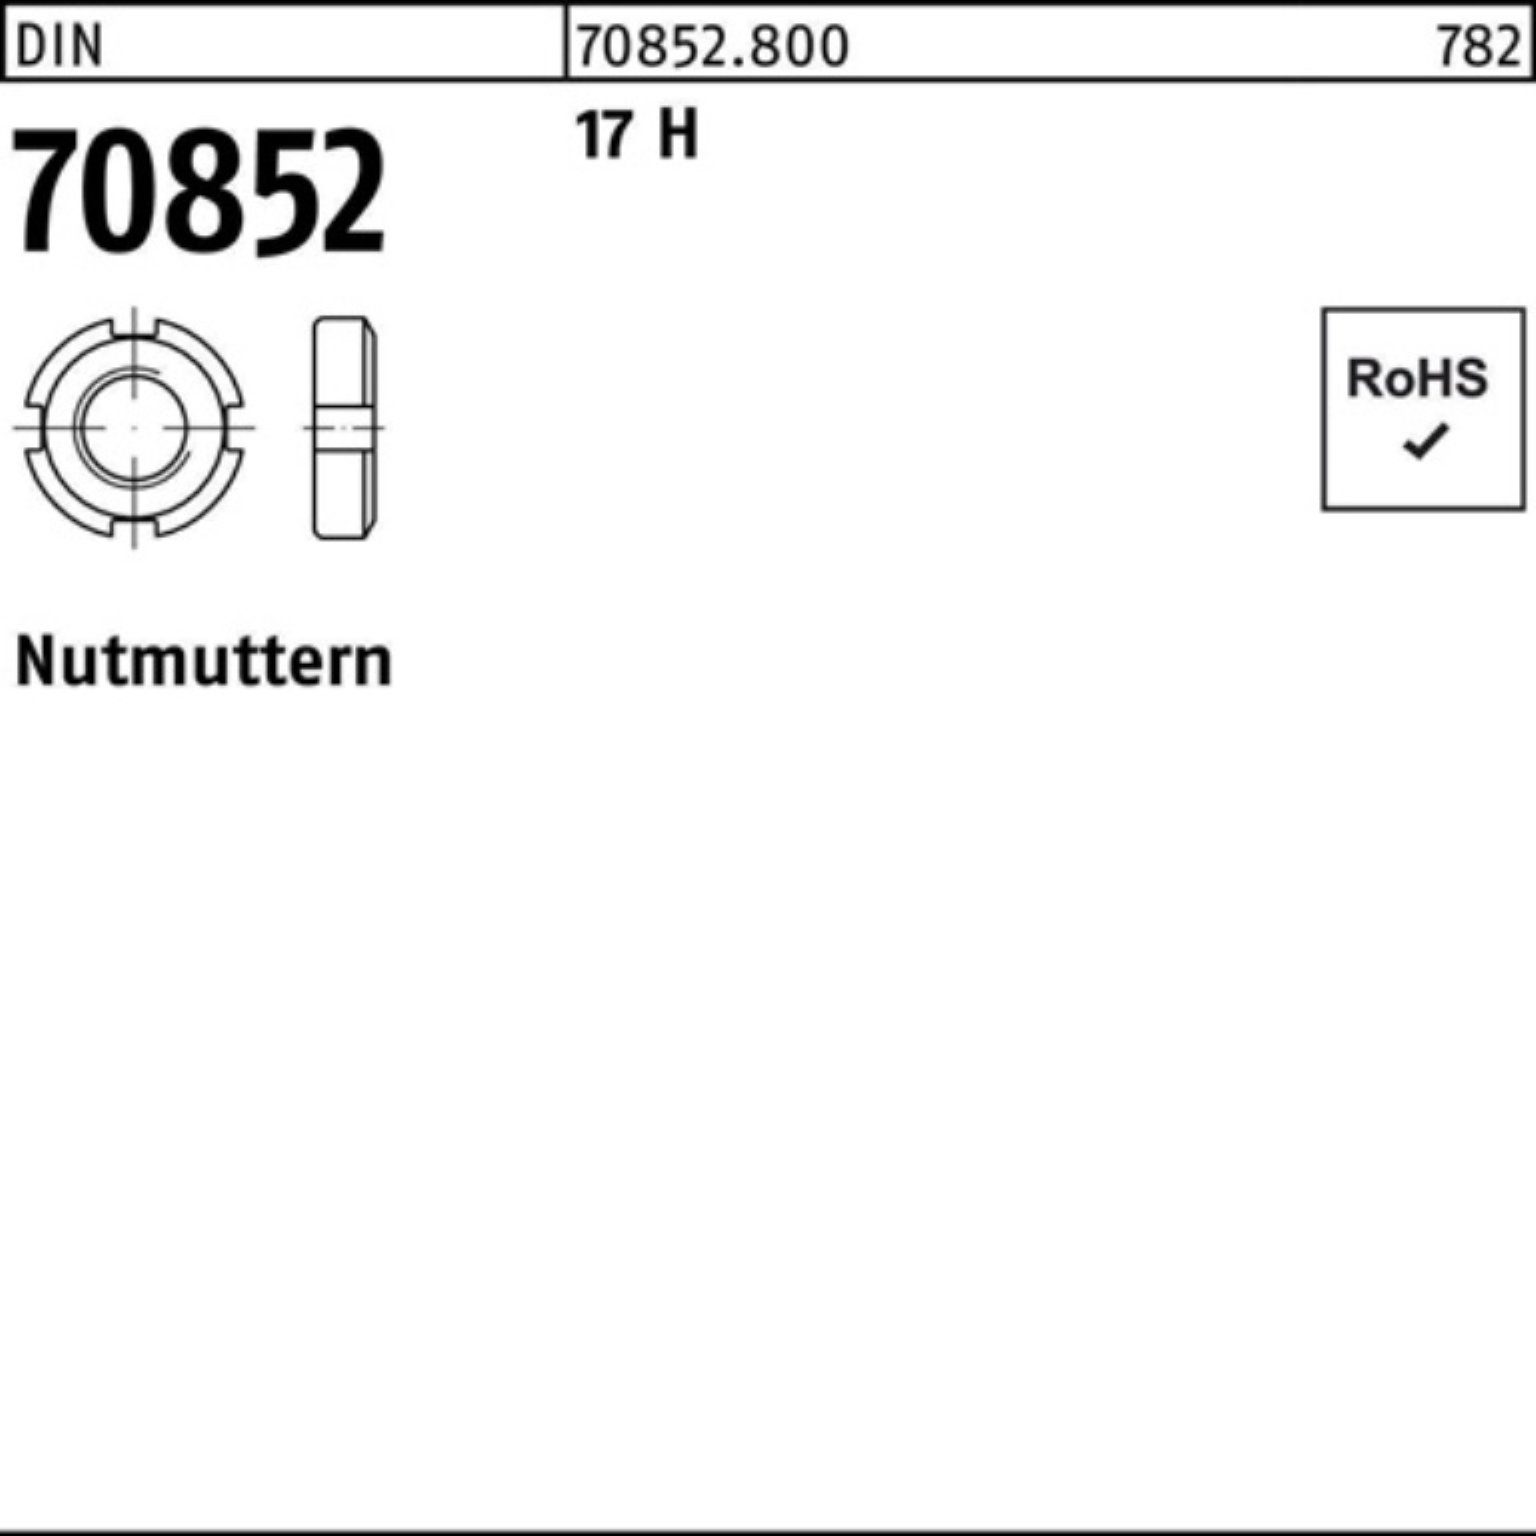 Reyher Nutmutter 100er Pack Nutmutter DIN 70852 M24x 1,5 17 H 10 Stück DIN 70852 17 H